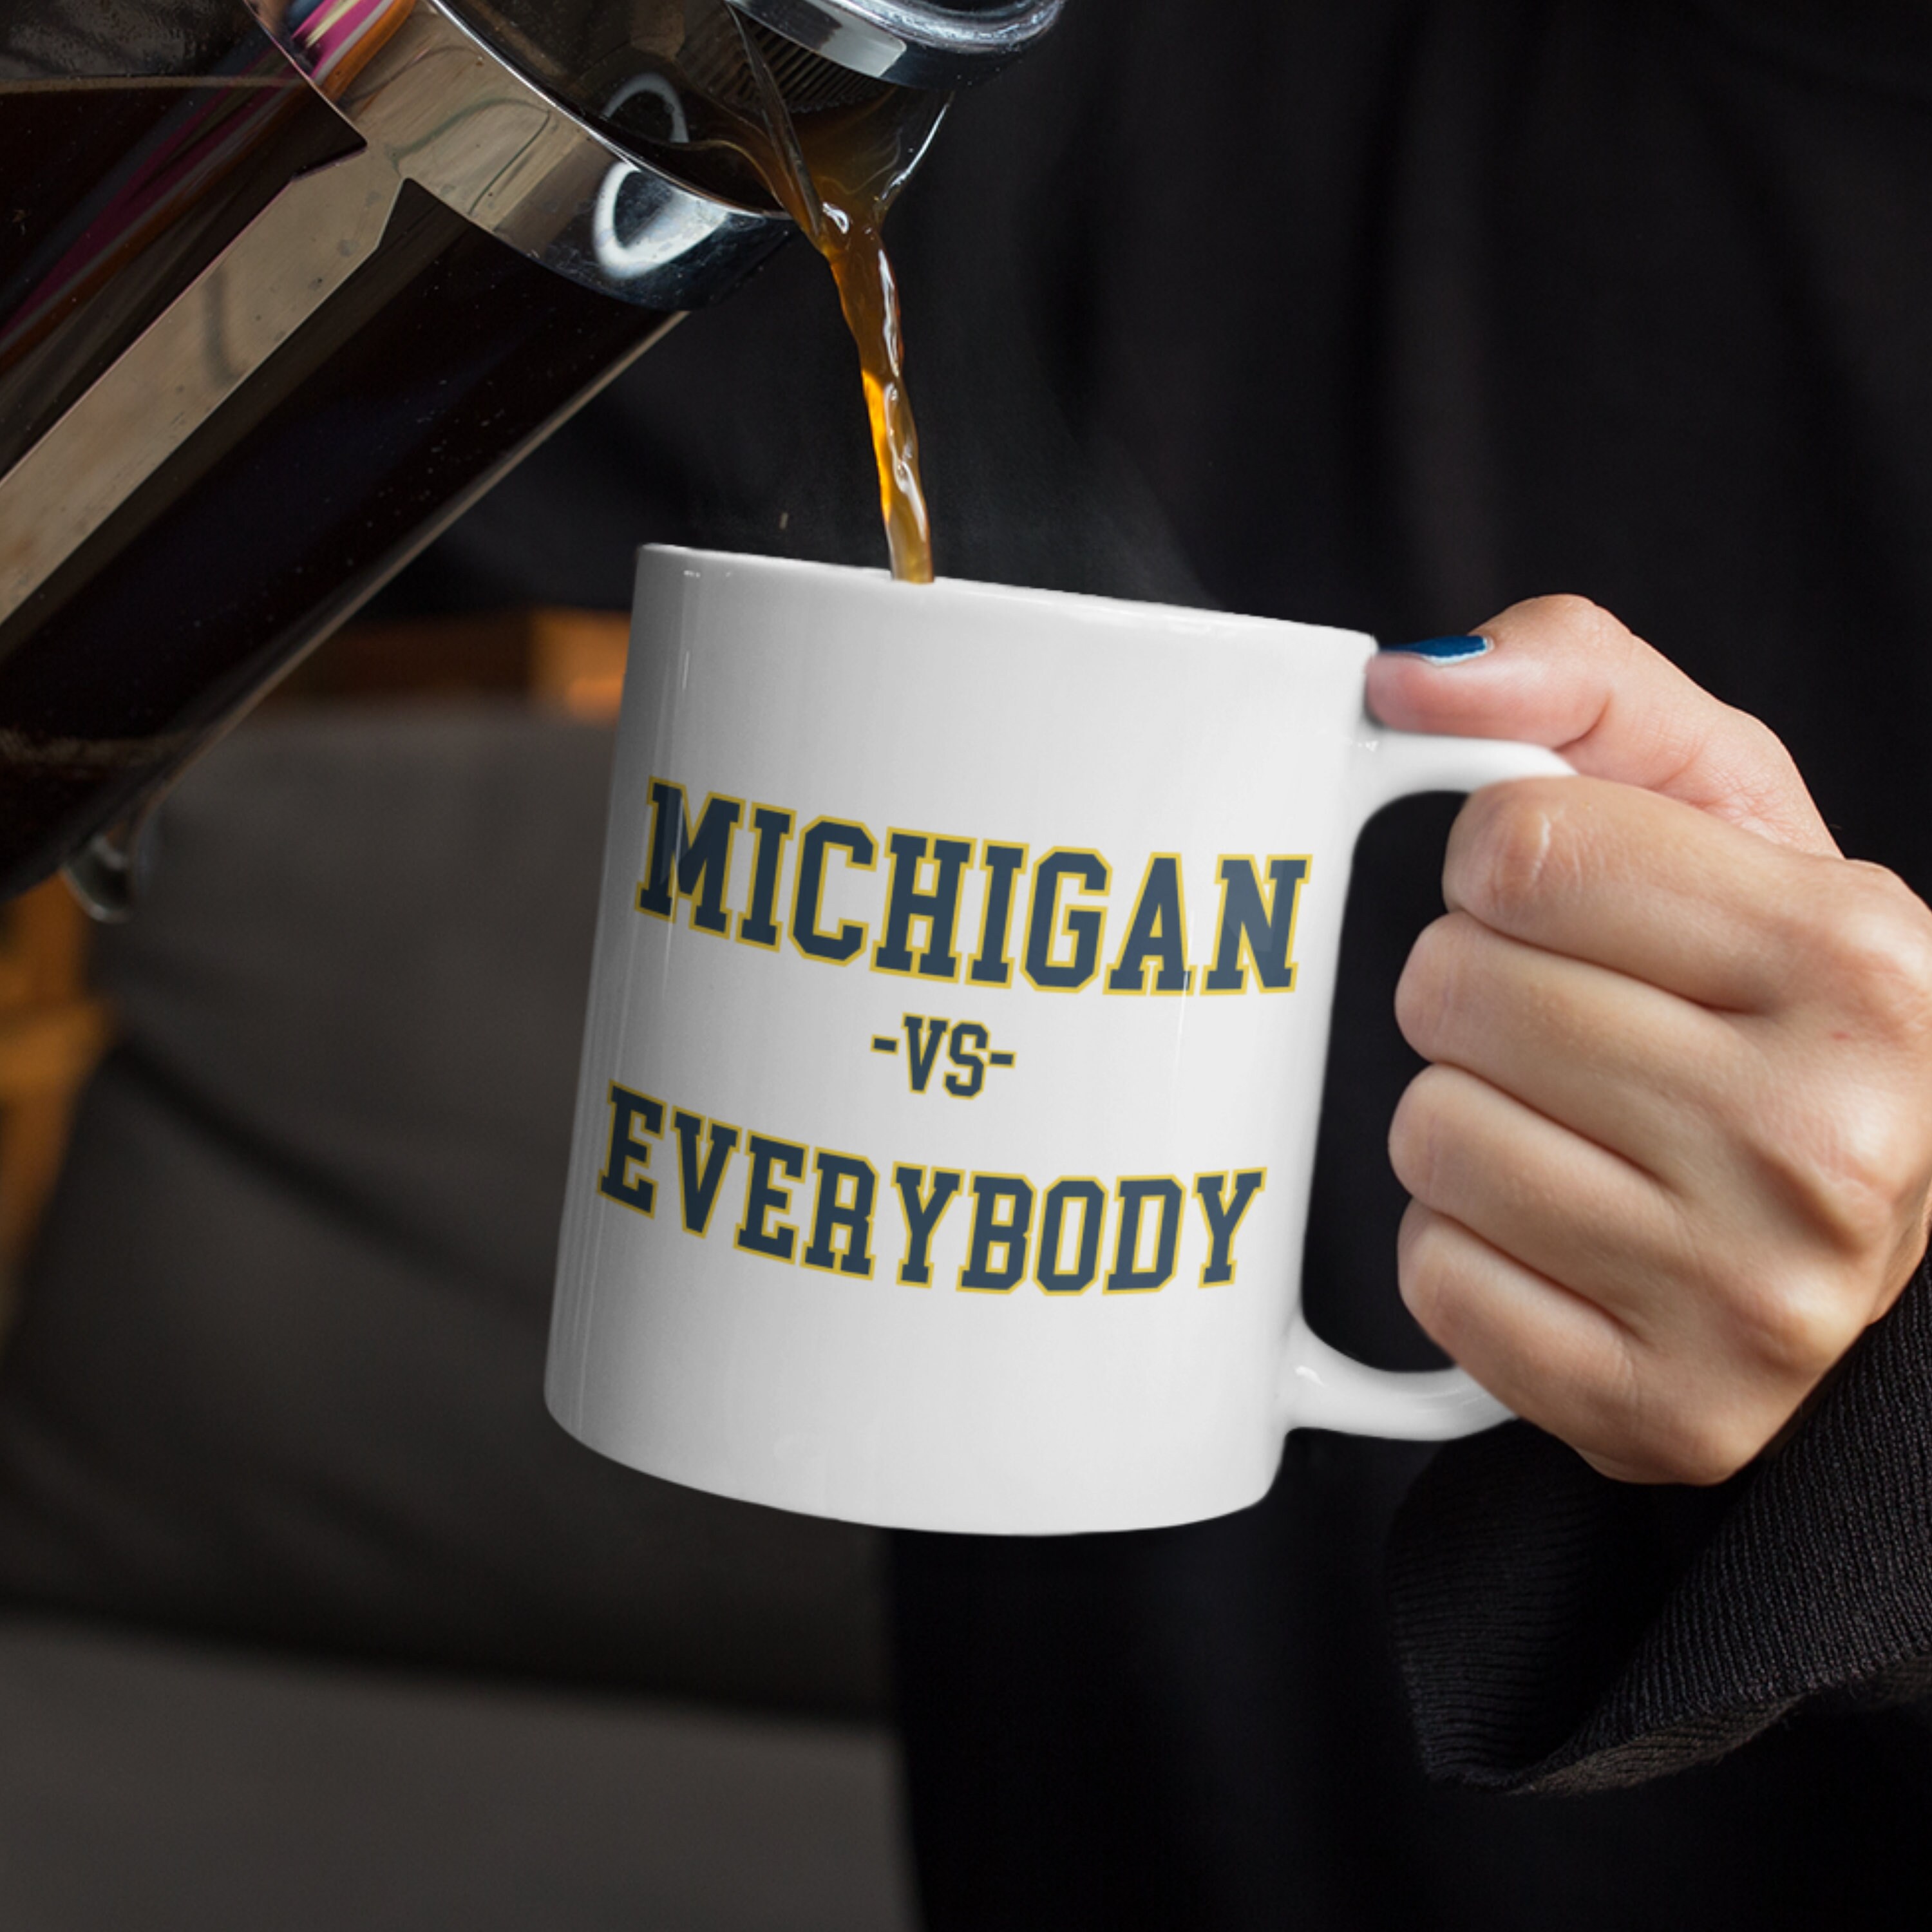 Michigan Tumbler, Michigan Gifts, Michigan Travel Mug, Michigan Coffee  Tumbler, Home State Michigan, Michigan Housewarming Gift, State Pride 